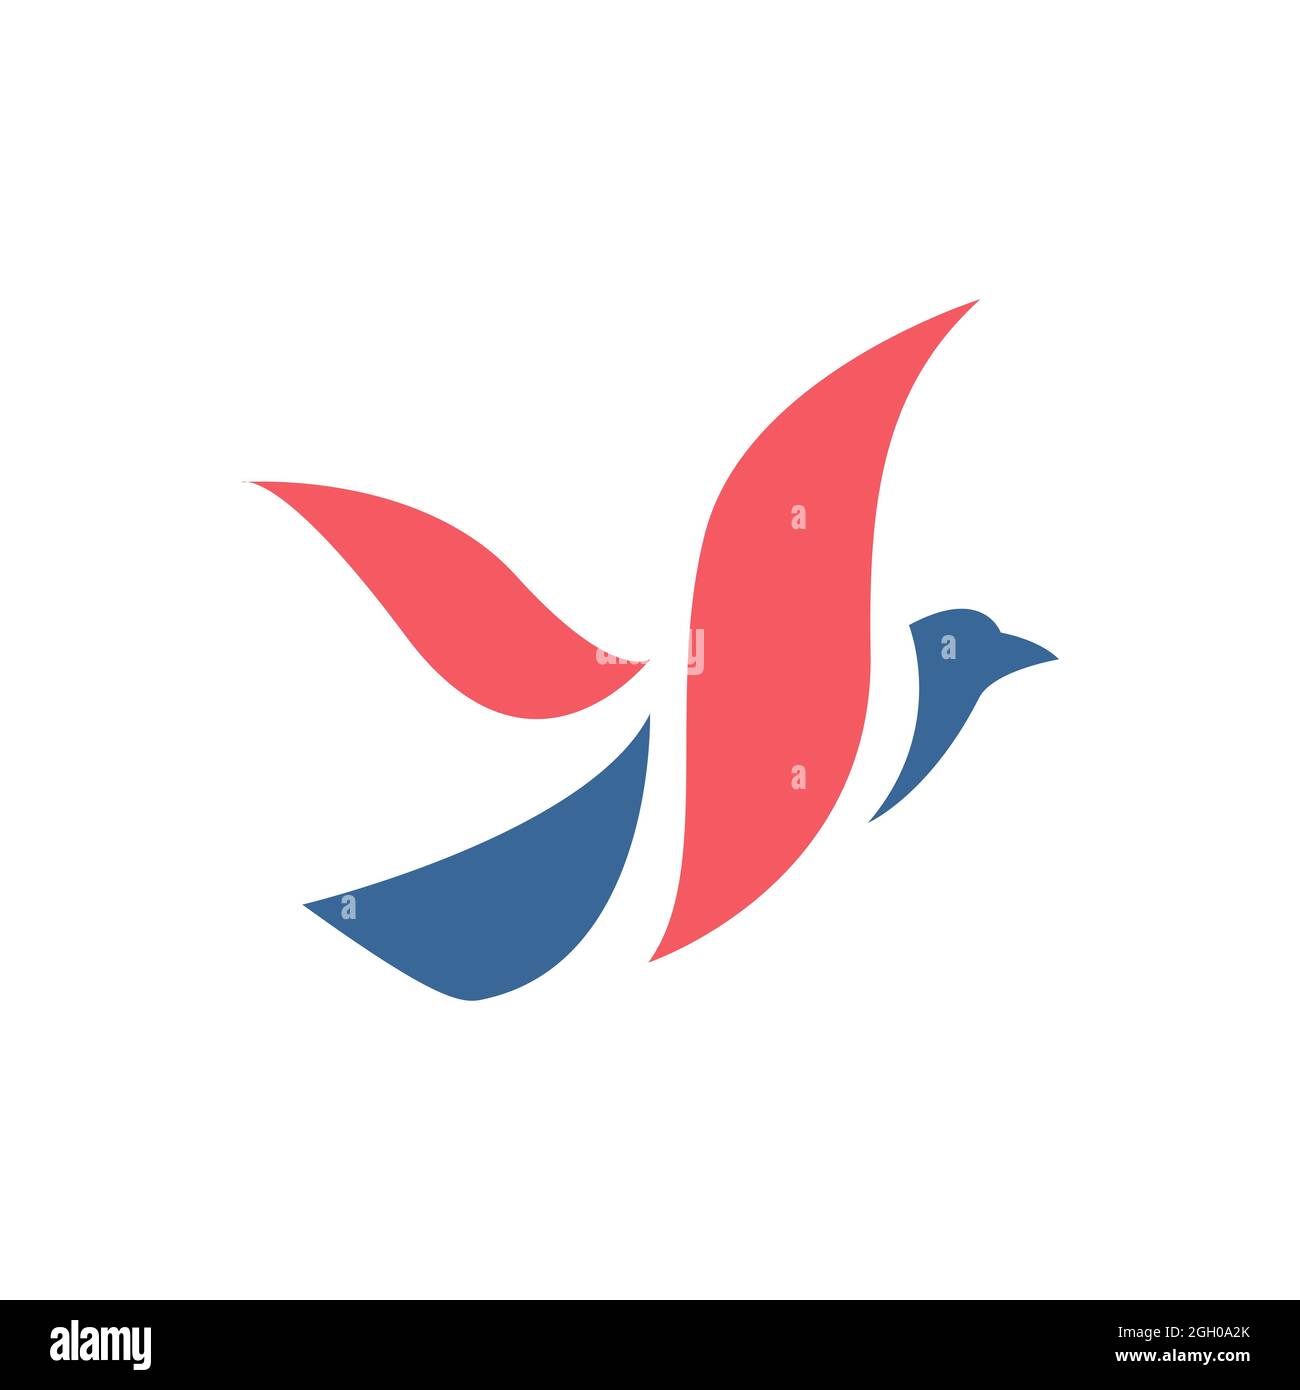 Flying Bird Logo Fly birds Grafik Vorlage Vektor Illustration für Anwendung App Branding Logos Stock Vektor